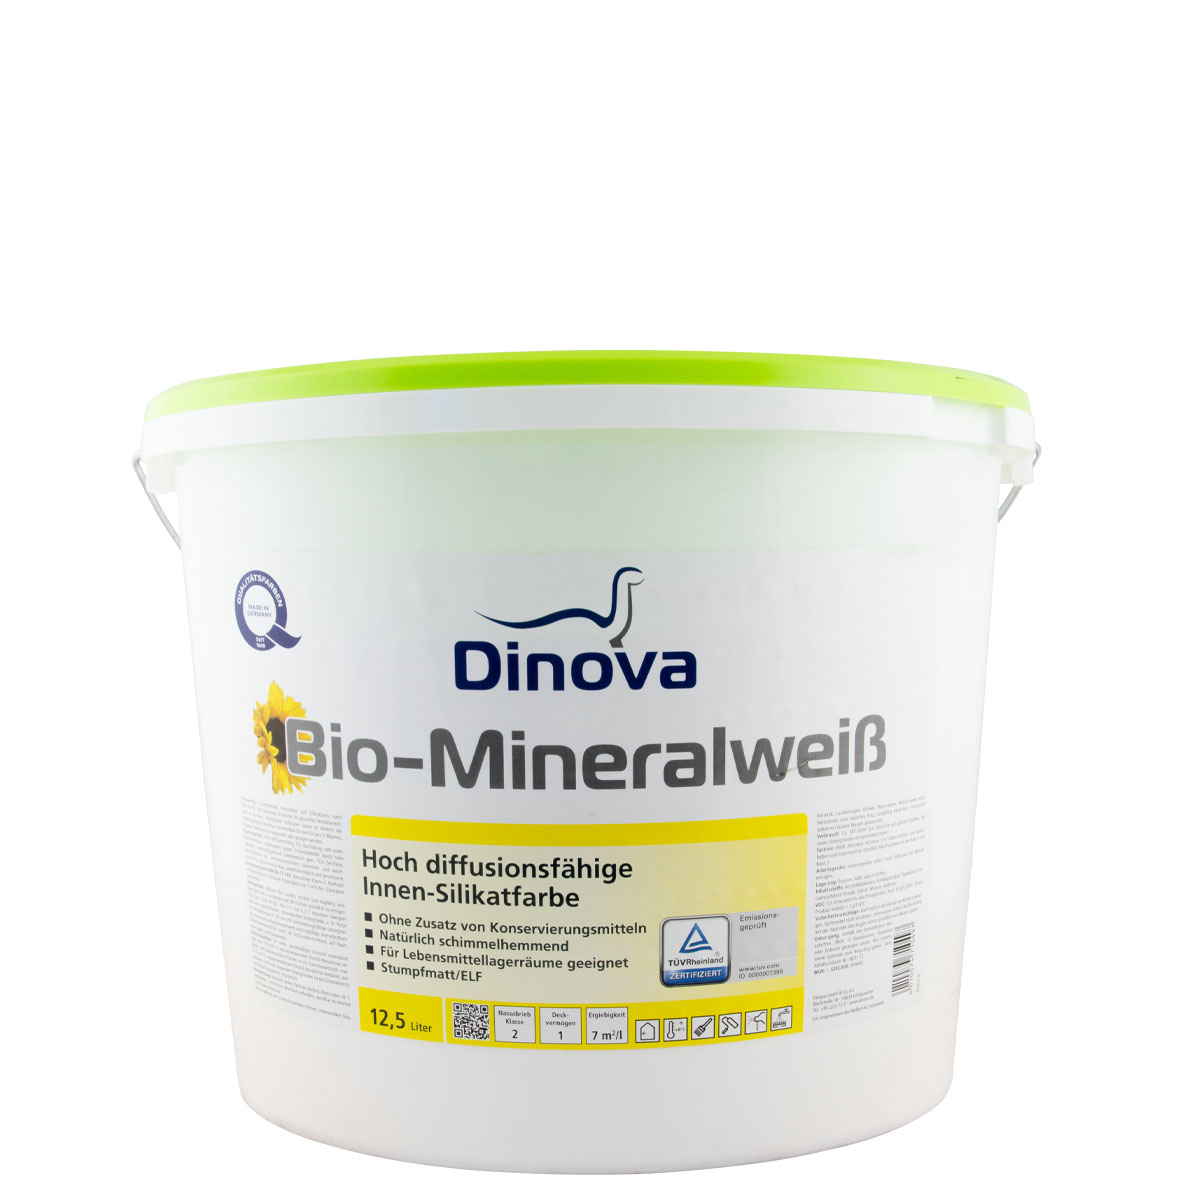 Dinova Bio-Mineralweiß 12,5L weiss, Wandfarbe, Silikatfarbe, Allergikerfreundlich